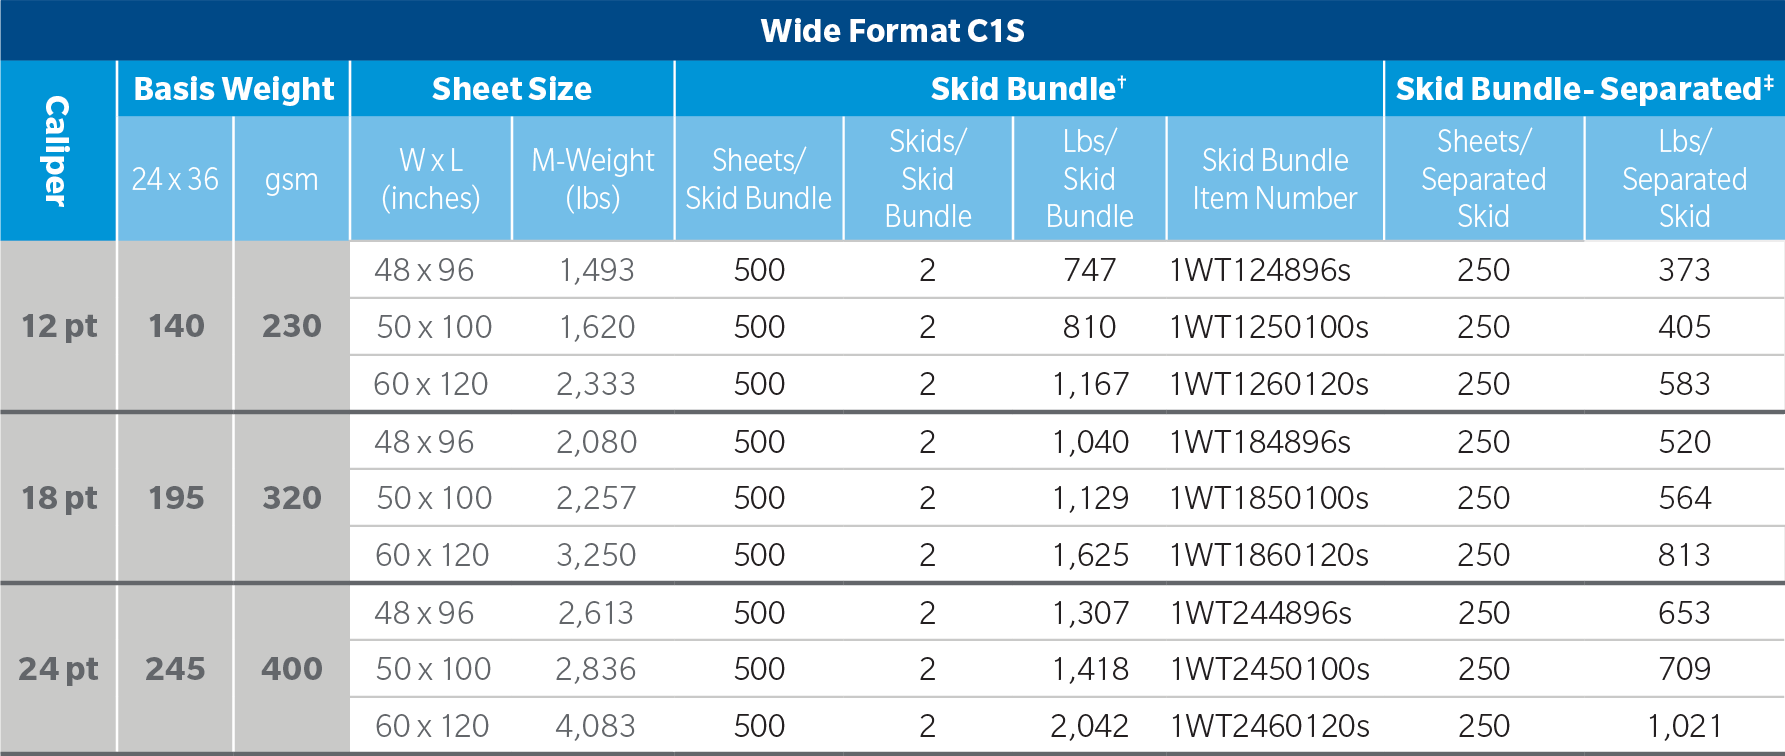 Tango Wide Format C1S chart